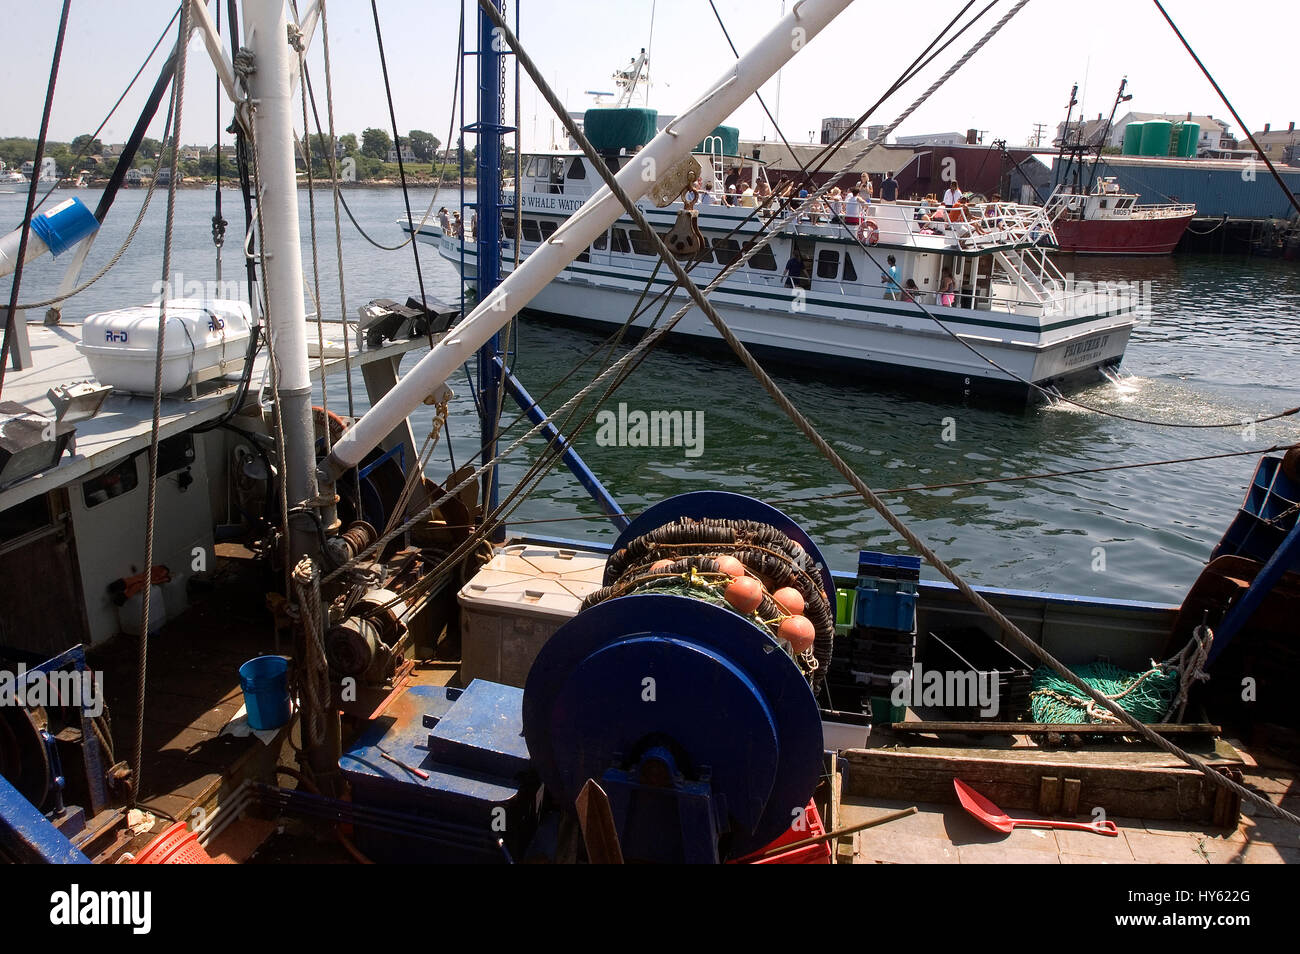 Un barco whalewatch pasa un barco de pesca dejando Gloucester Harbor, Massachusetts Foto de stock